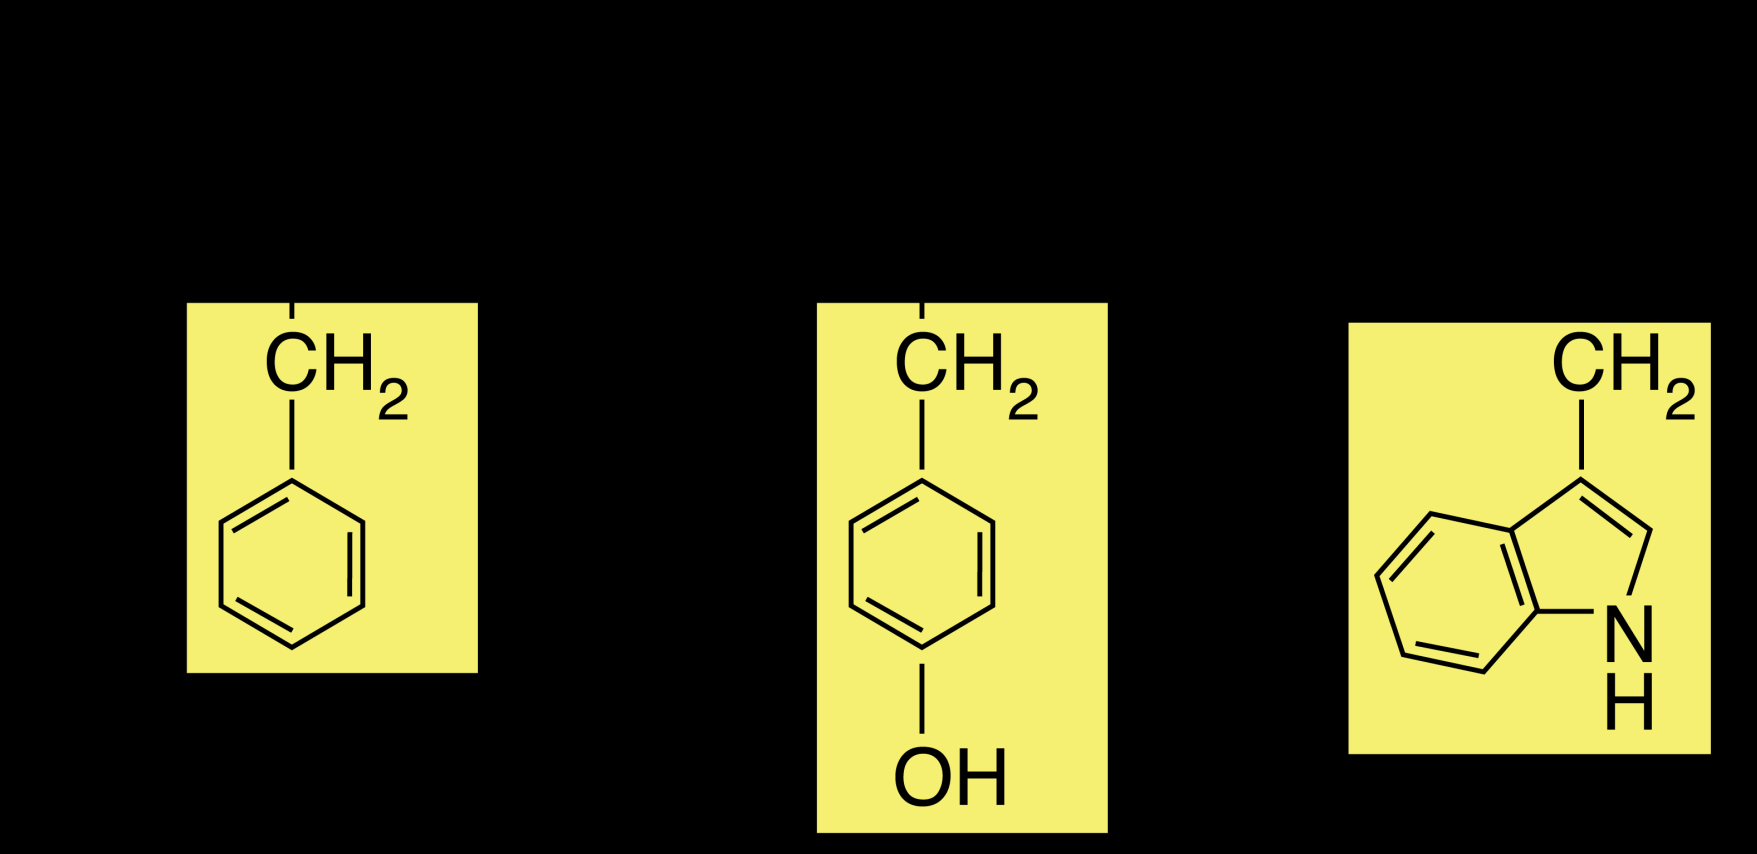 23 Fenilalanin (Phe veya F) Tirozin (Tyr veya Y) Triptofan